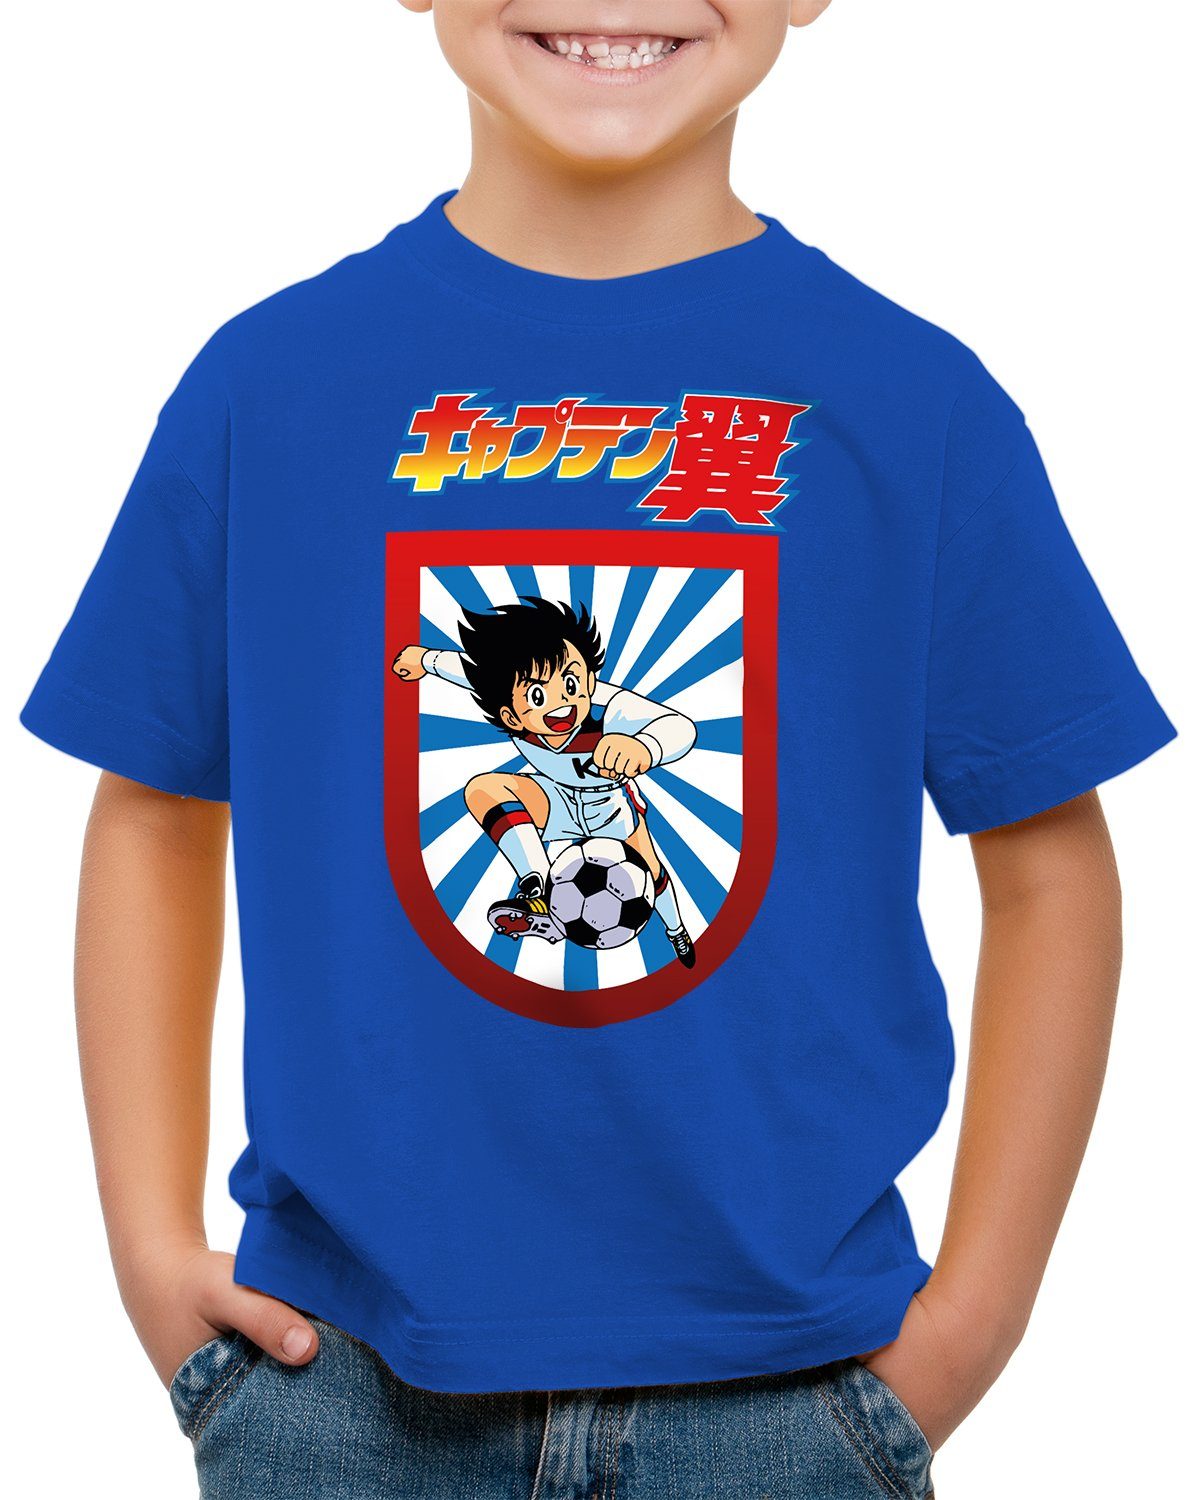 style3 Print-Shirt Kinder T-Shirt Tsubasa tollen fußballstars wm em blau